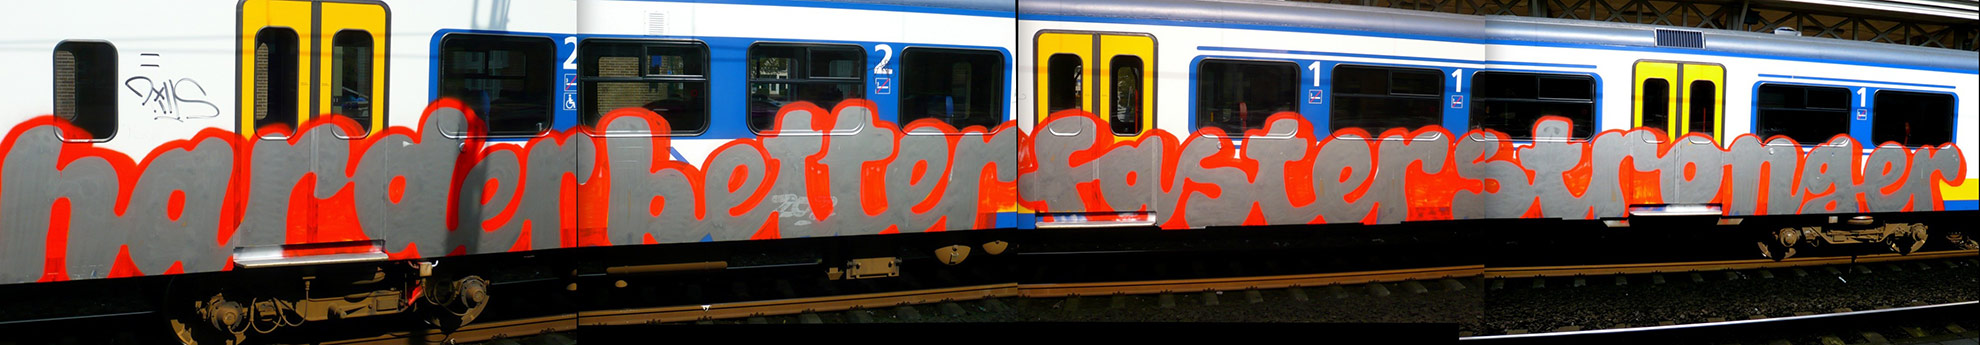 netherlands rotterdam train text-message